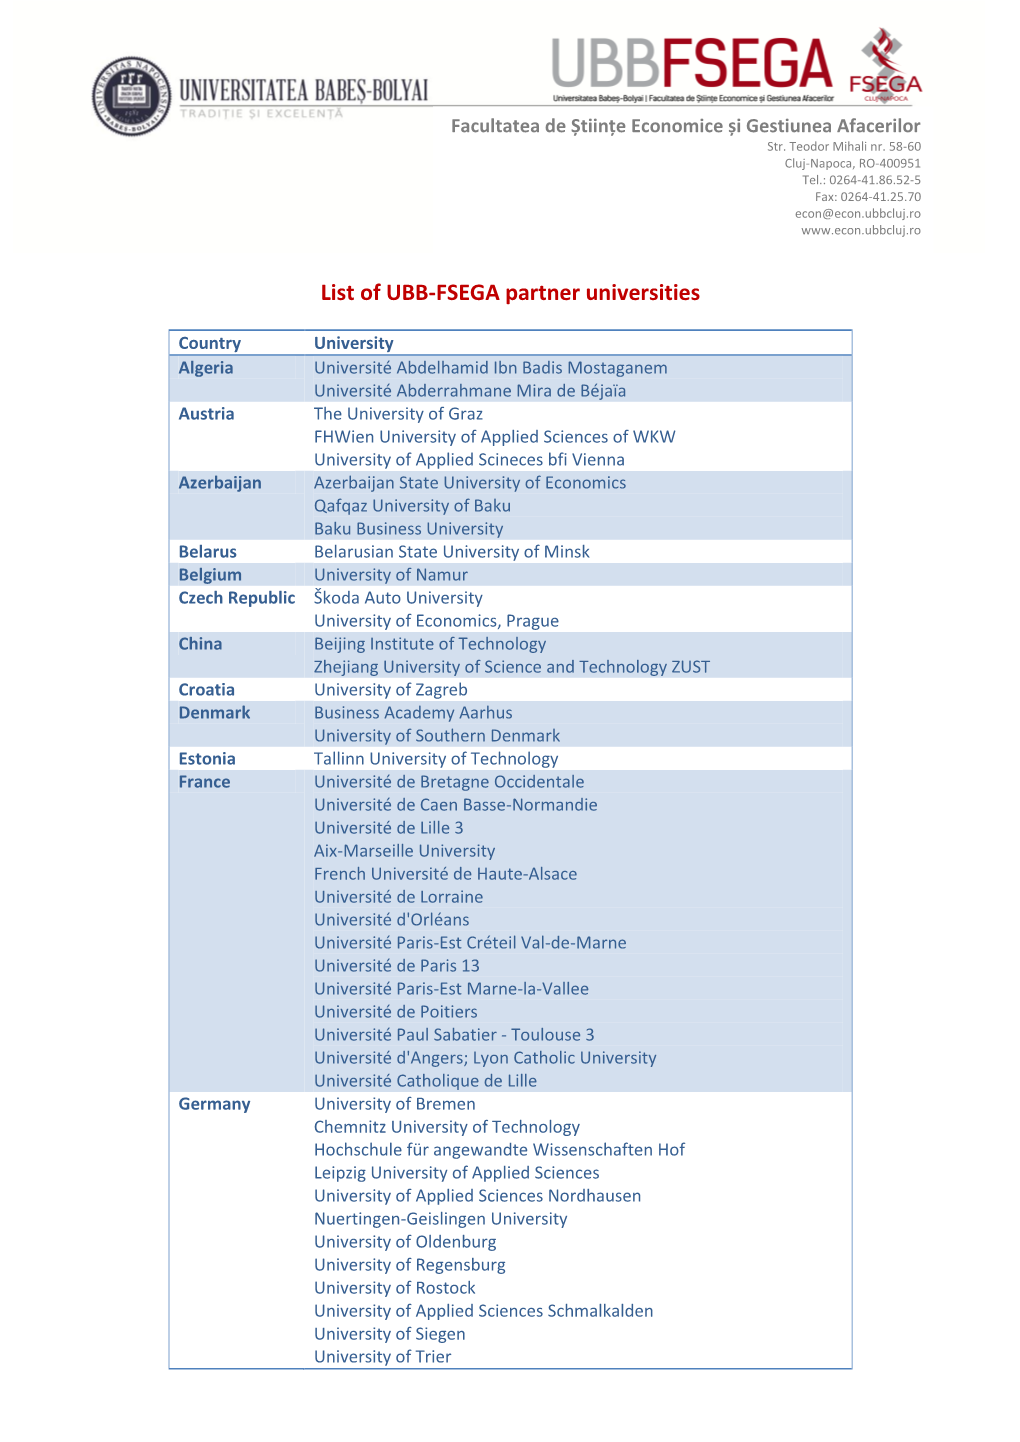 List of UBB-FSEGA Partner Universities